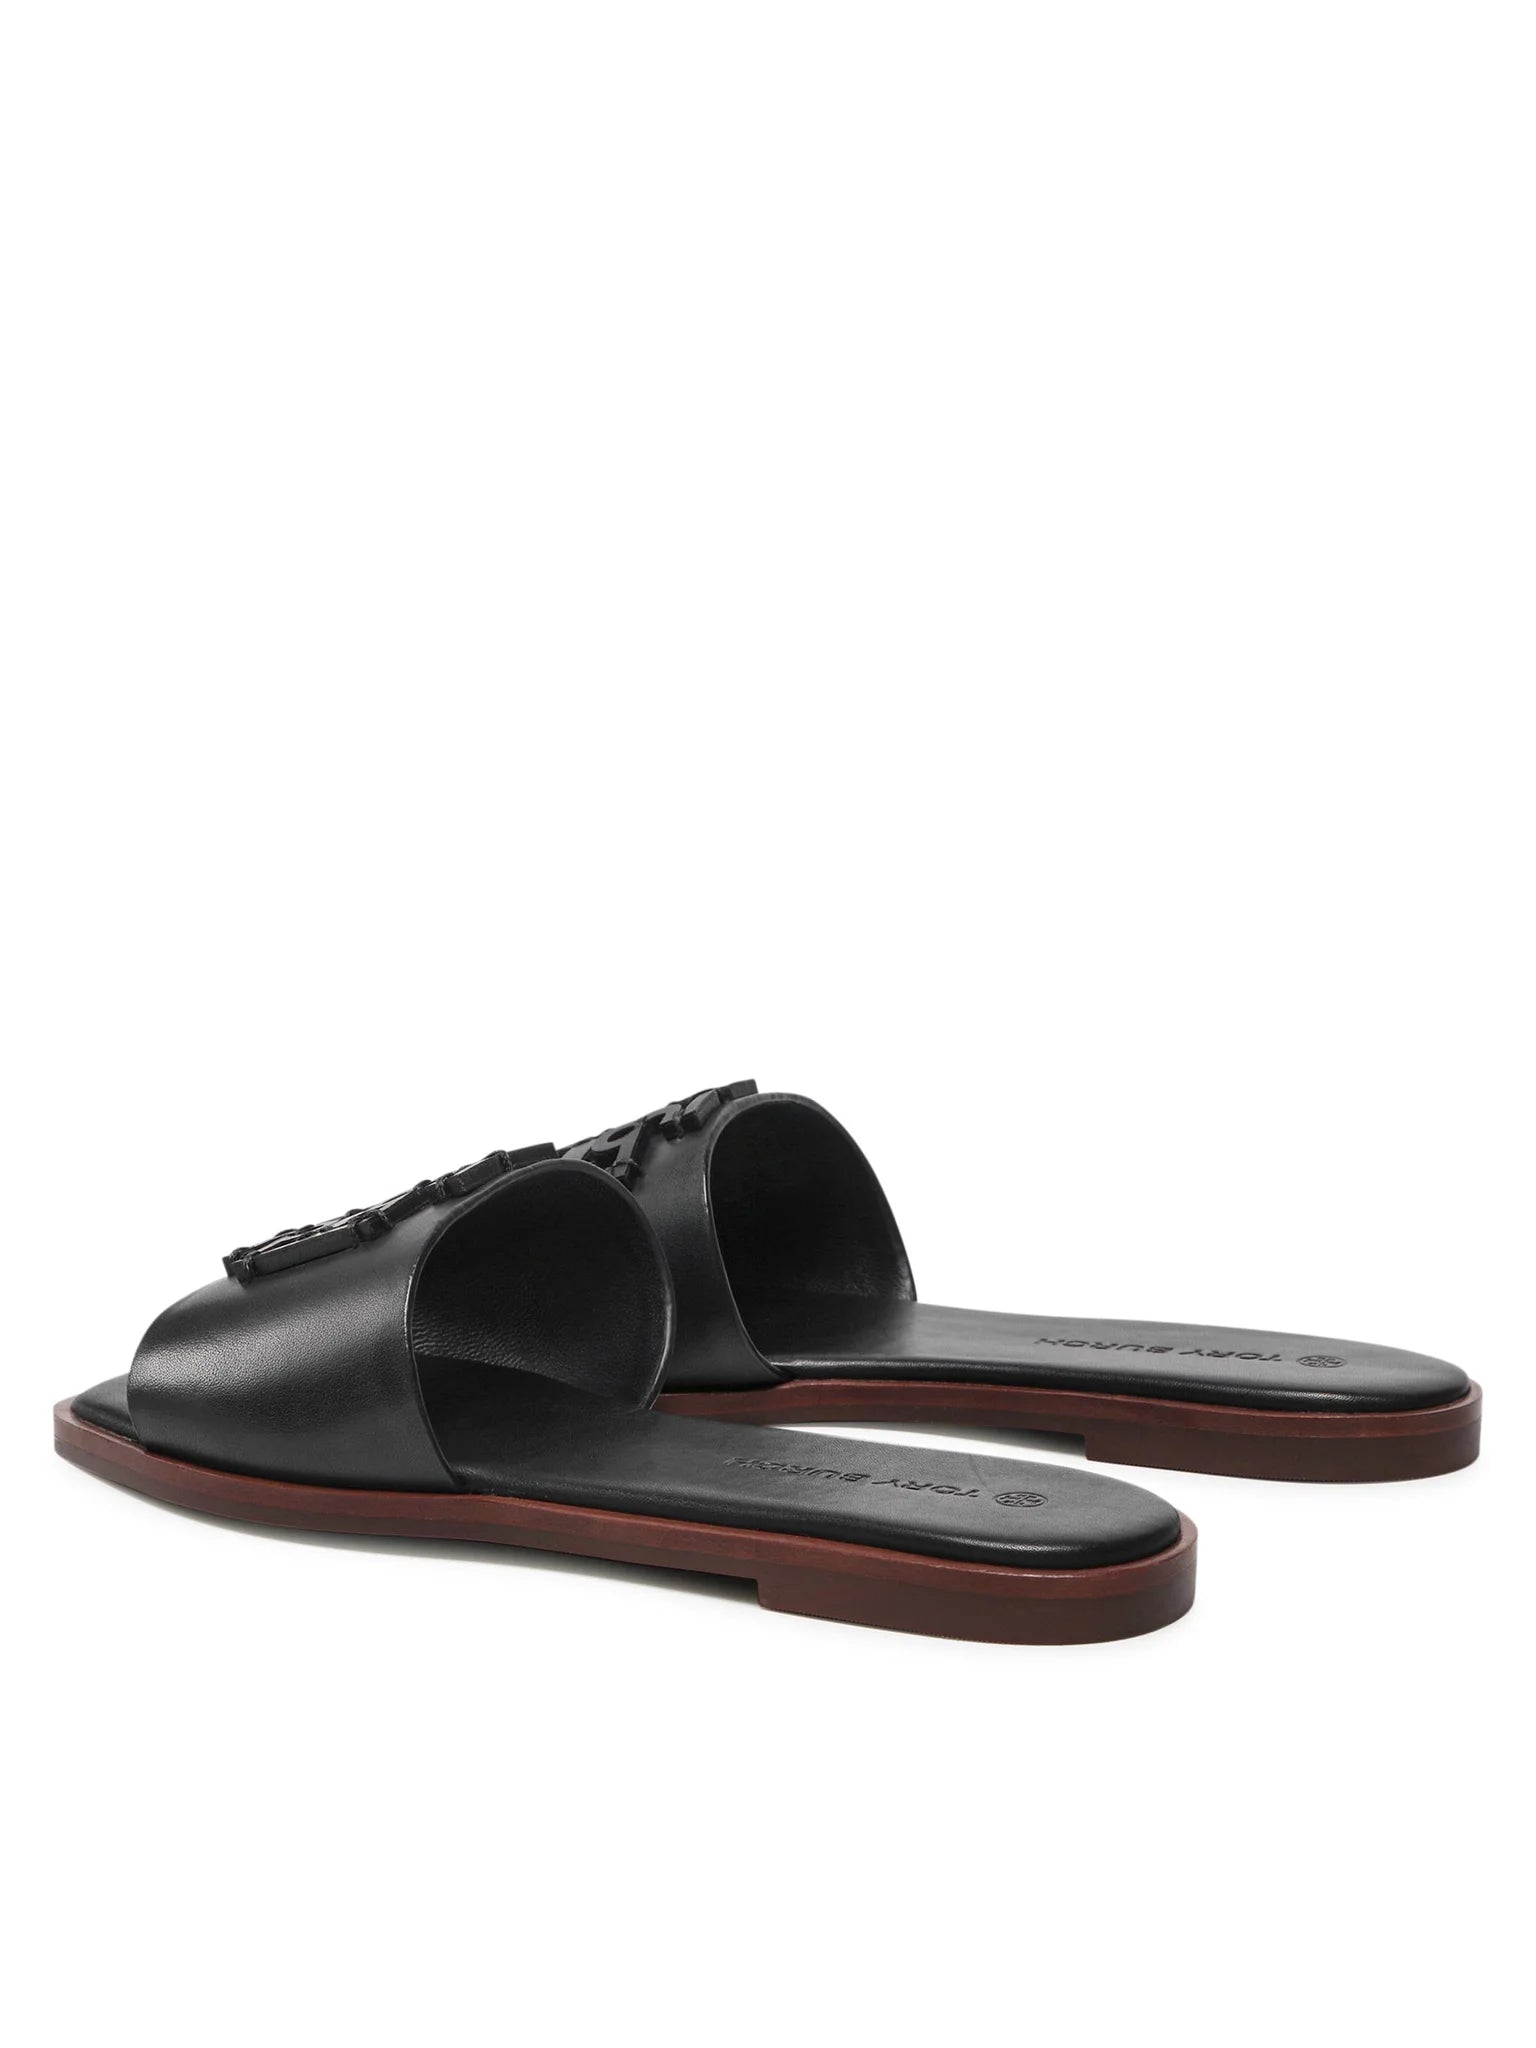 Tory Burch Ines Flat Sandals- Black (7.5)